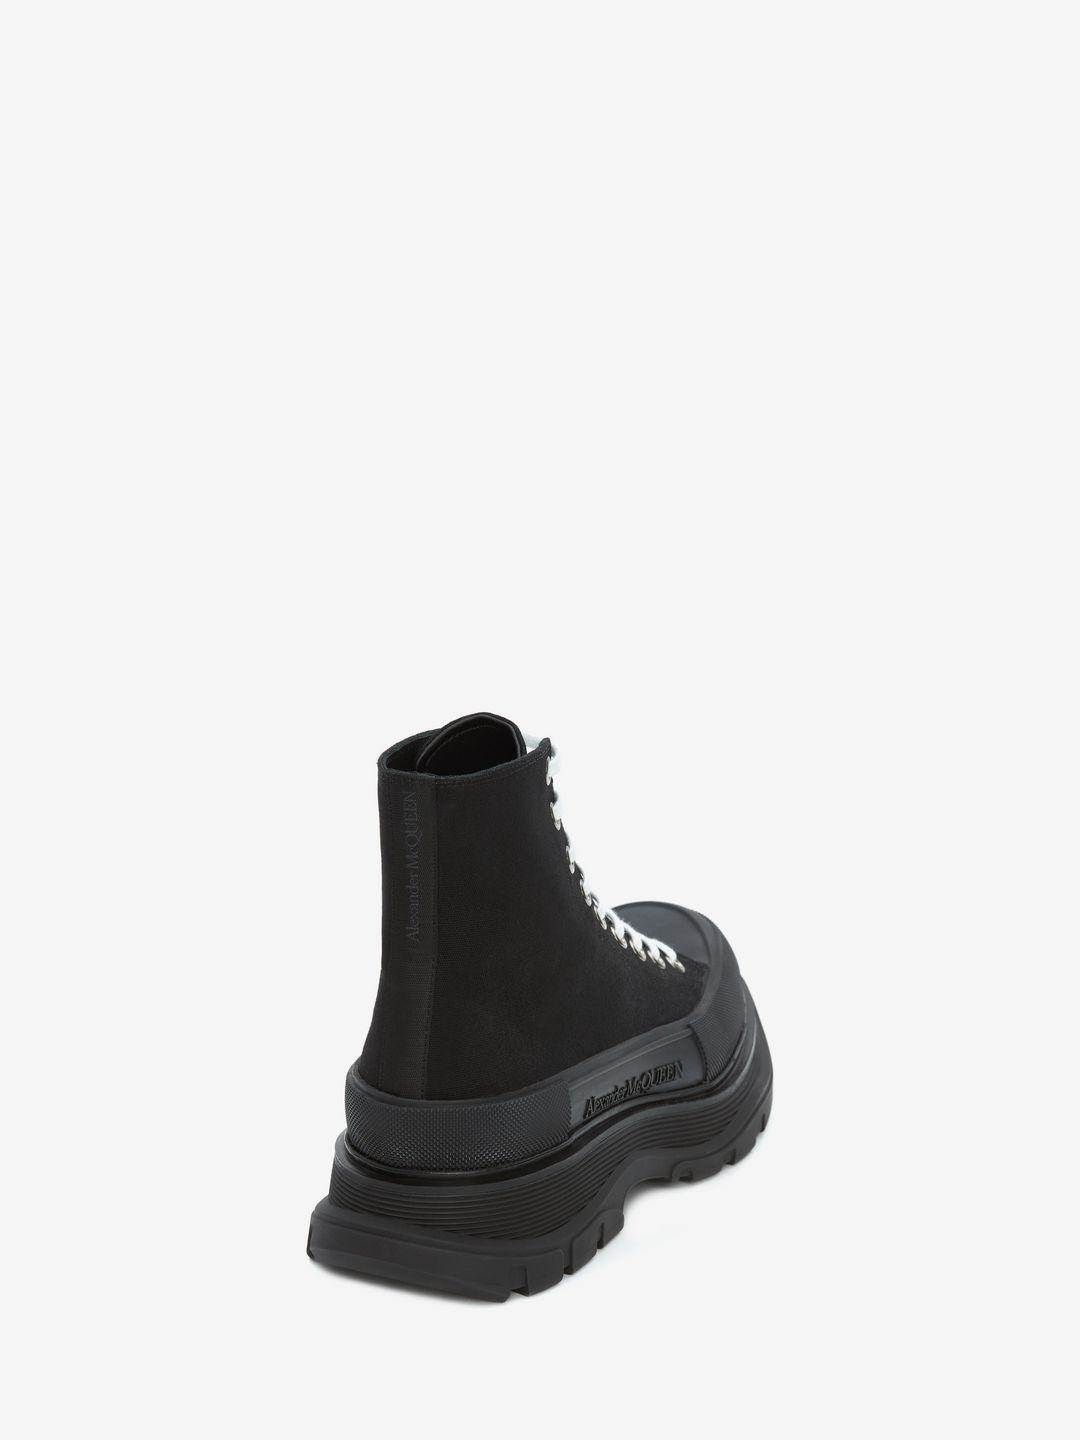 Alexander McQueen Canvas Tread Slick Boots in Black for Men - Save 